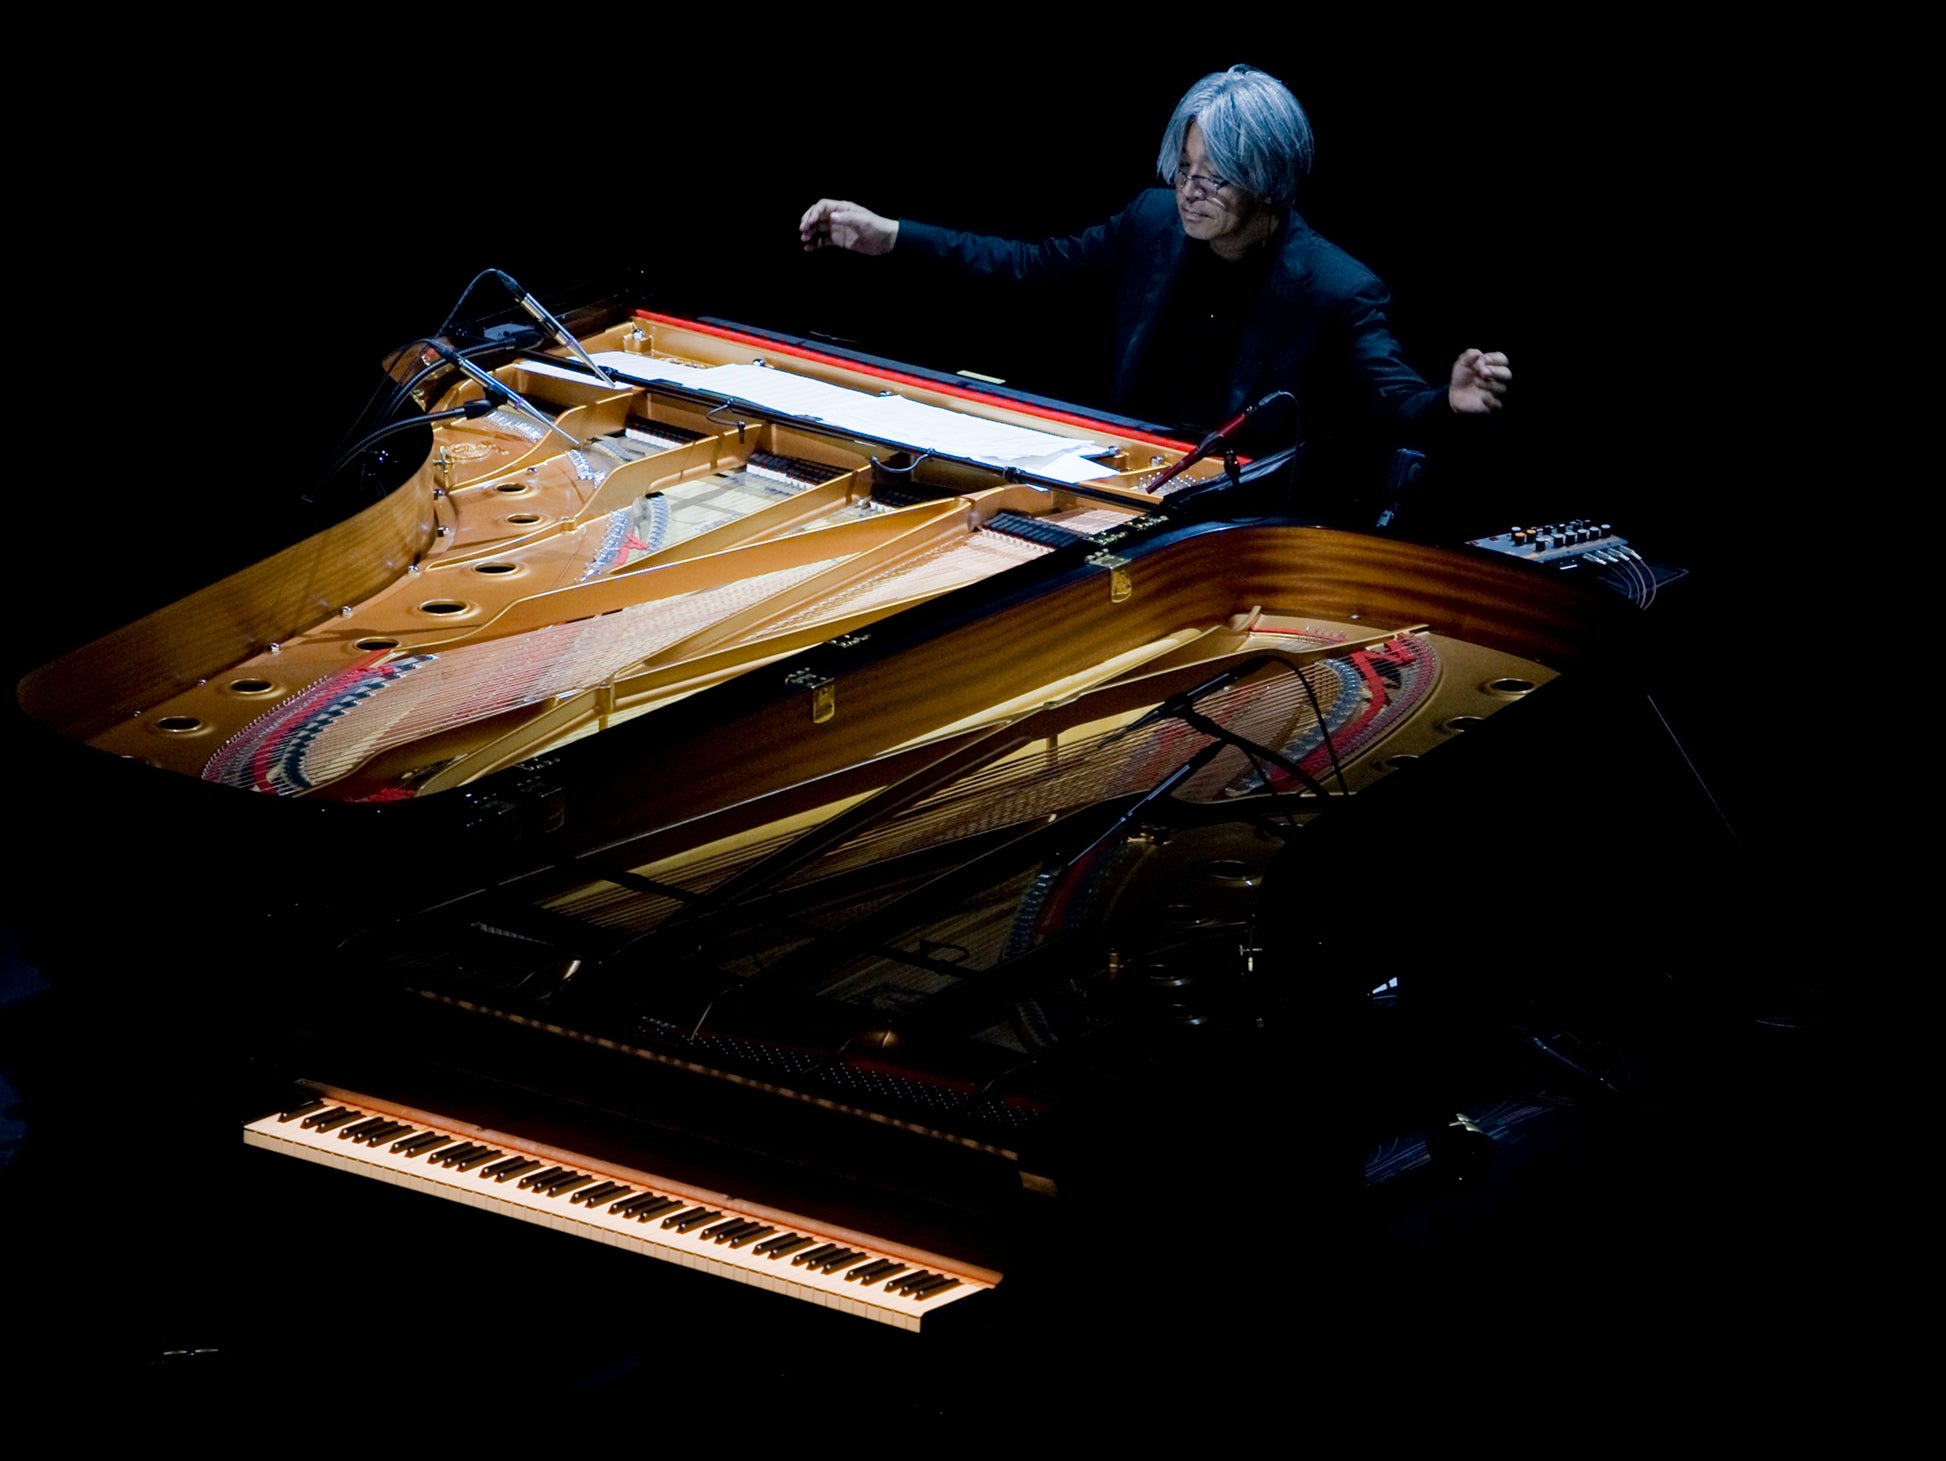 Performing at Rome’s Auditorium in October 2009